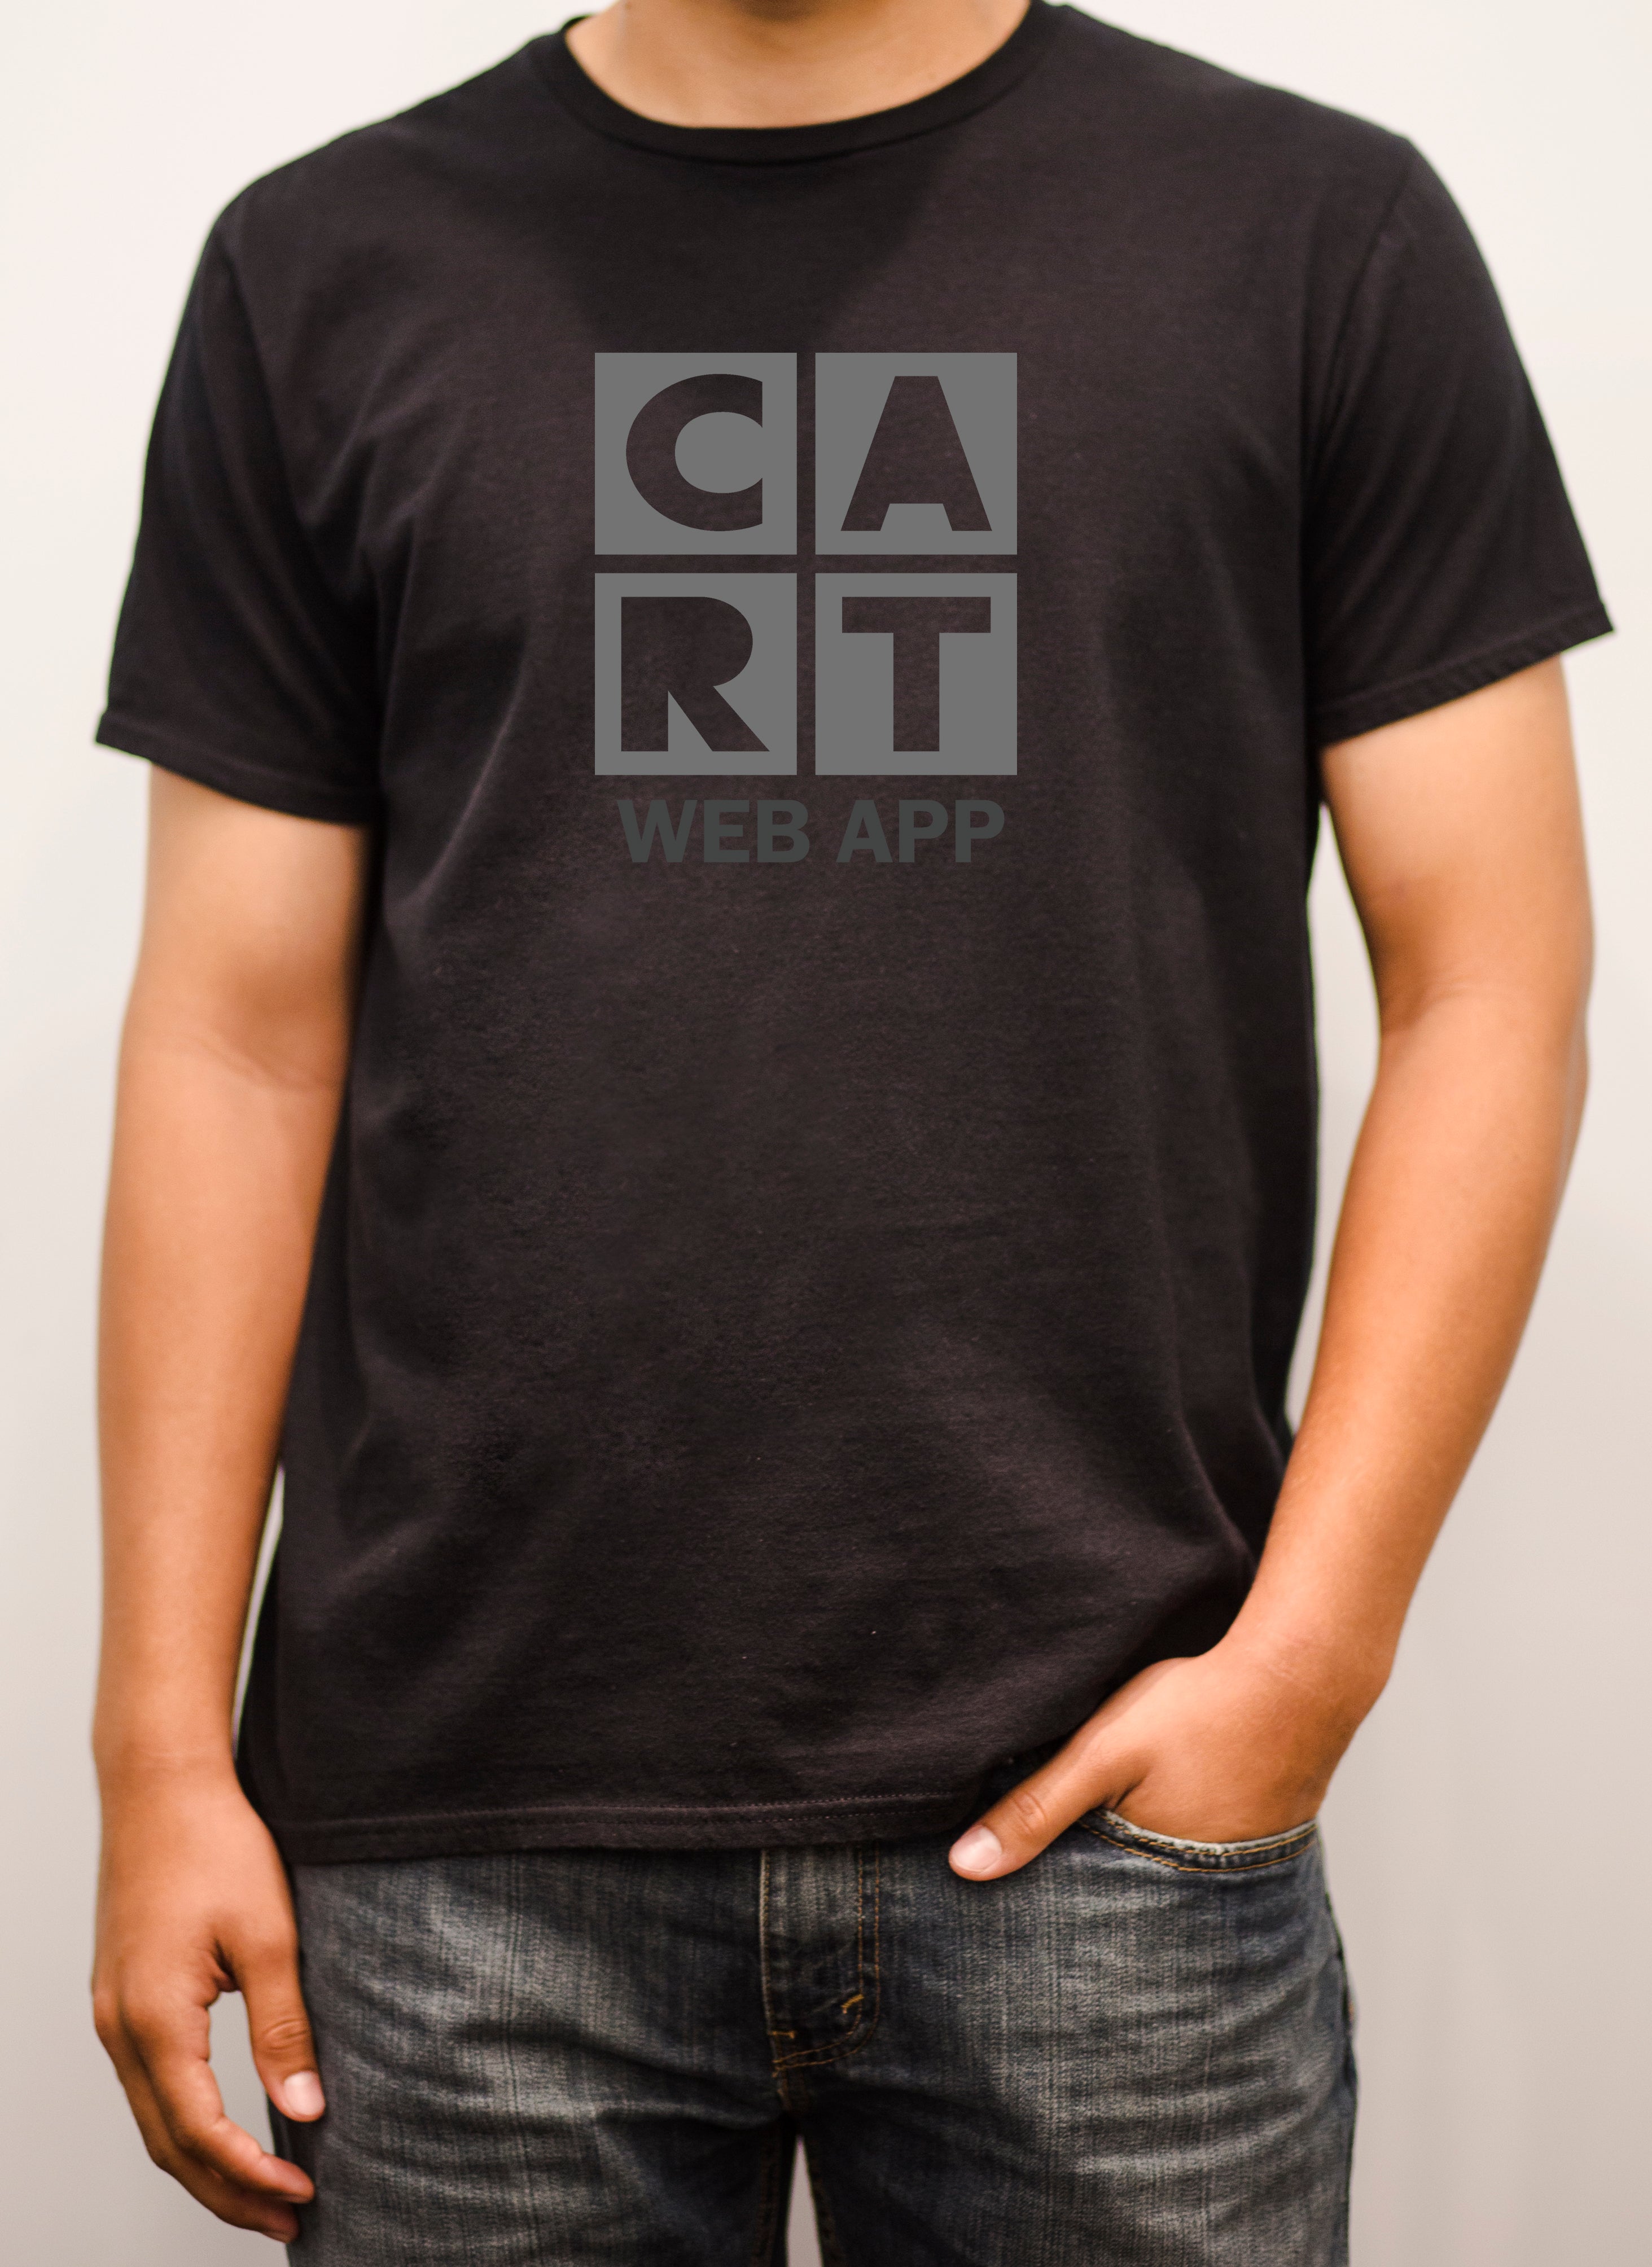 Short-Sleeve T-Shirt (Unisex fit) - Web App black/grey Logo